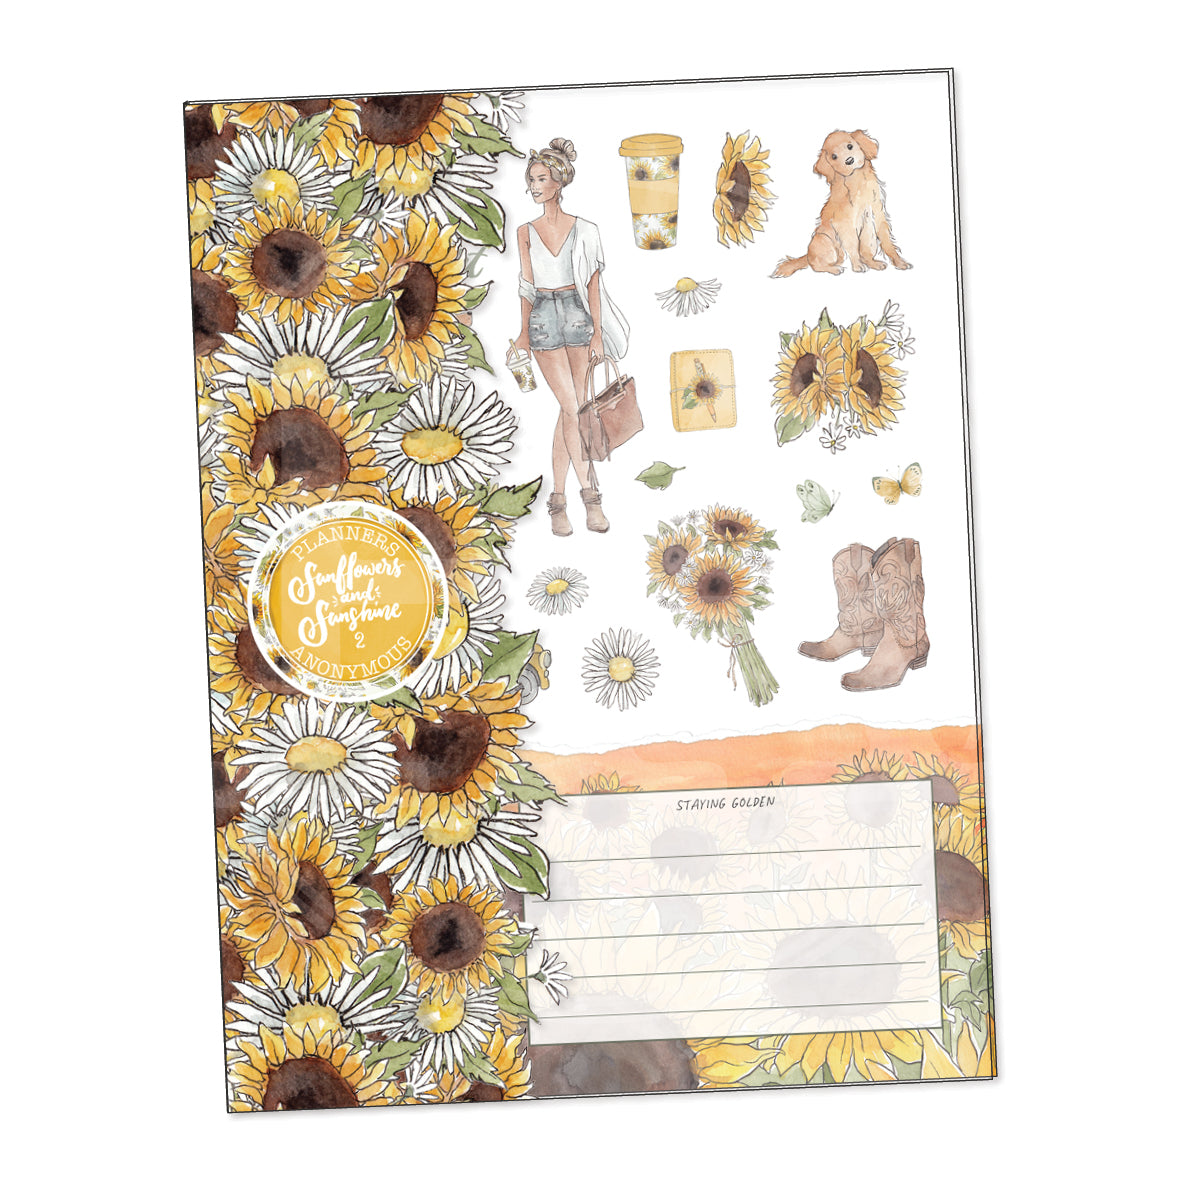 Sunflowers and Sunshine 2 planner sticker book